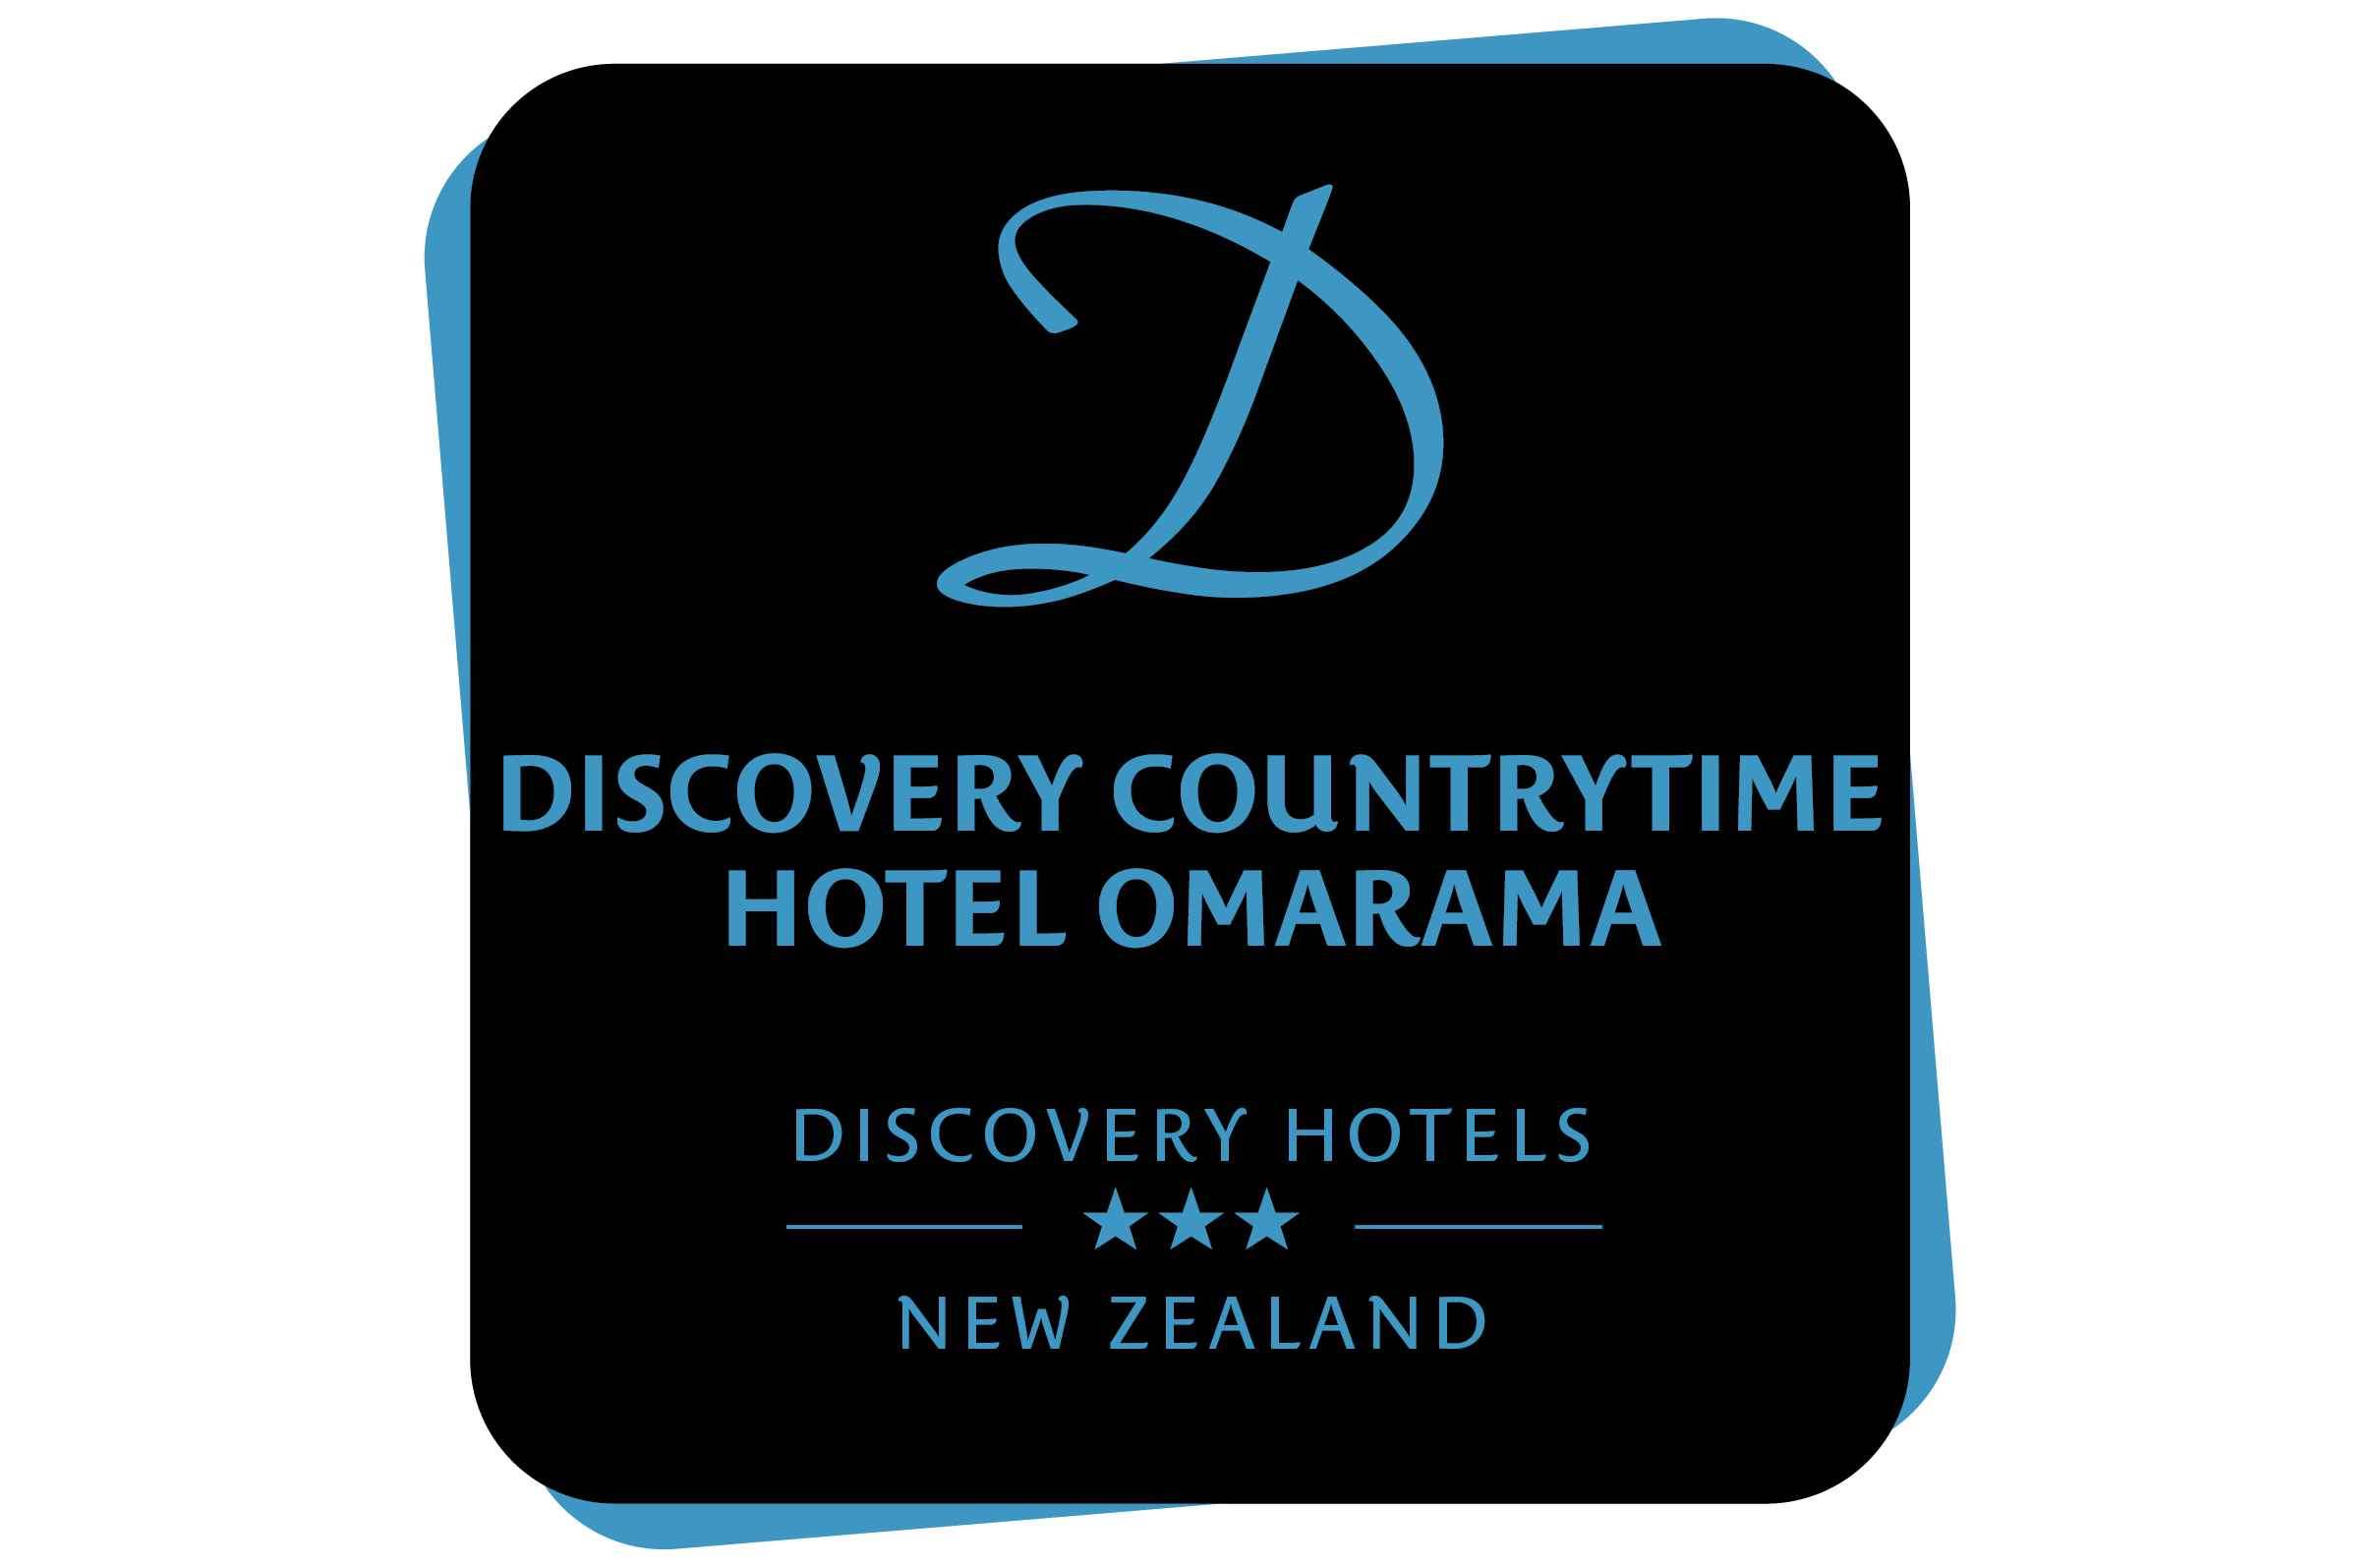 
Discovery Countrytime Hotel Omarama